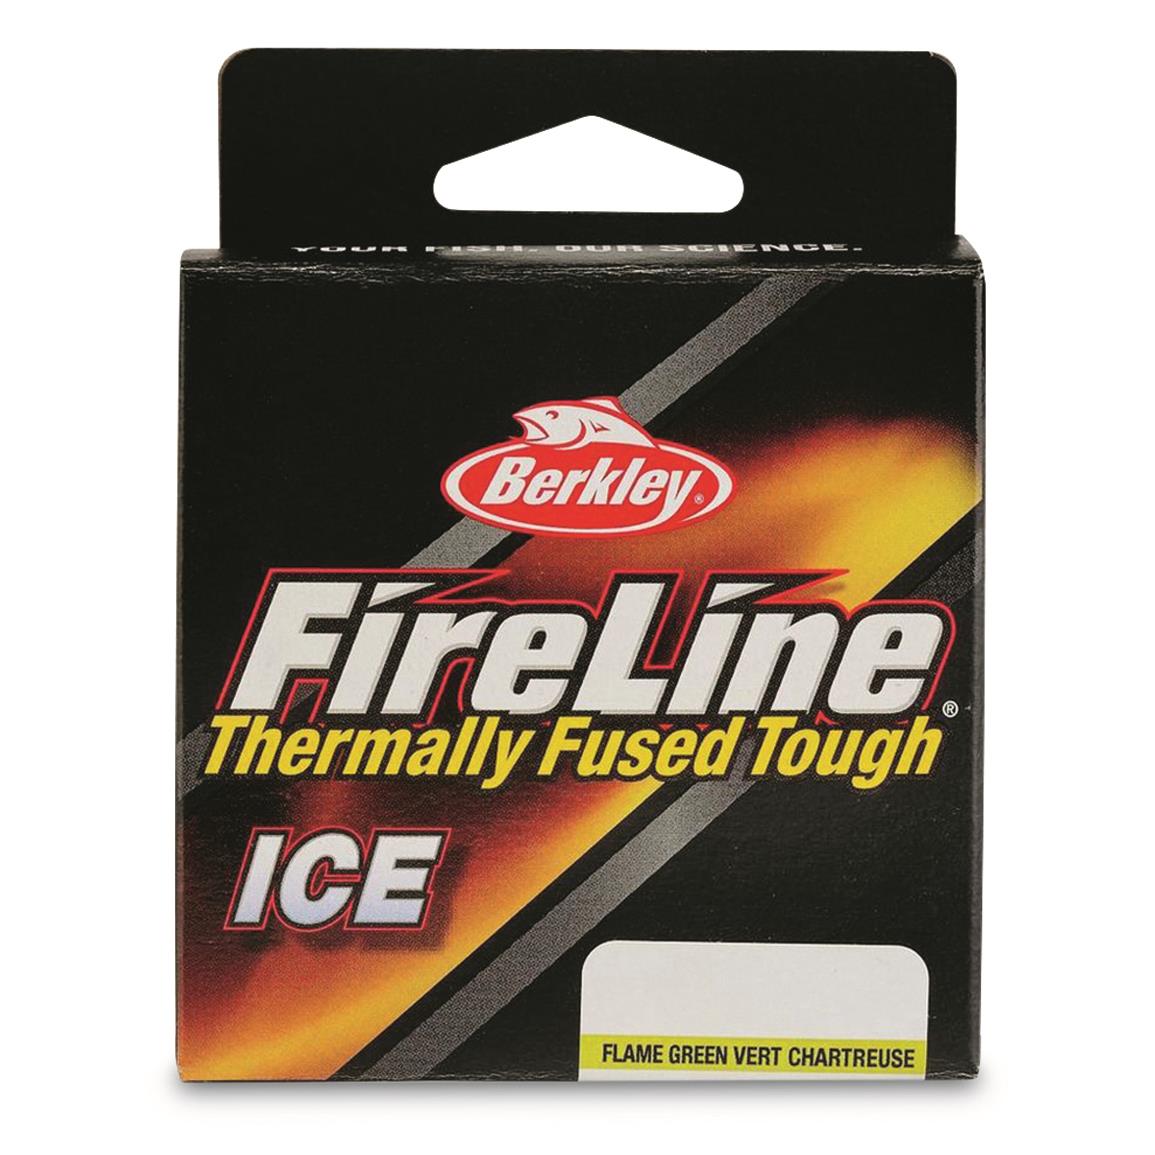 Berkley FireLine Thermal Fused Tough Ice Fishing Line, Flame Green